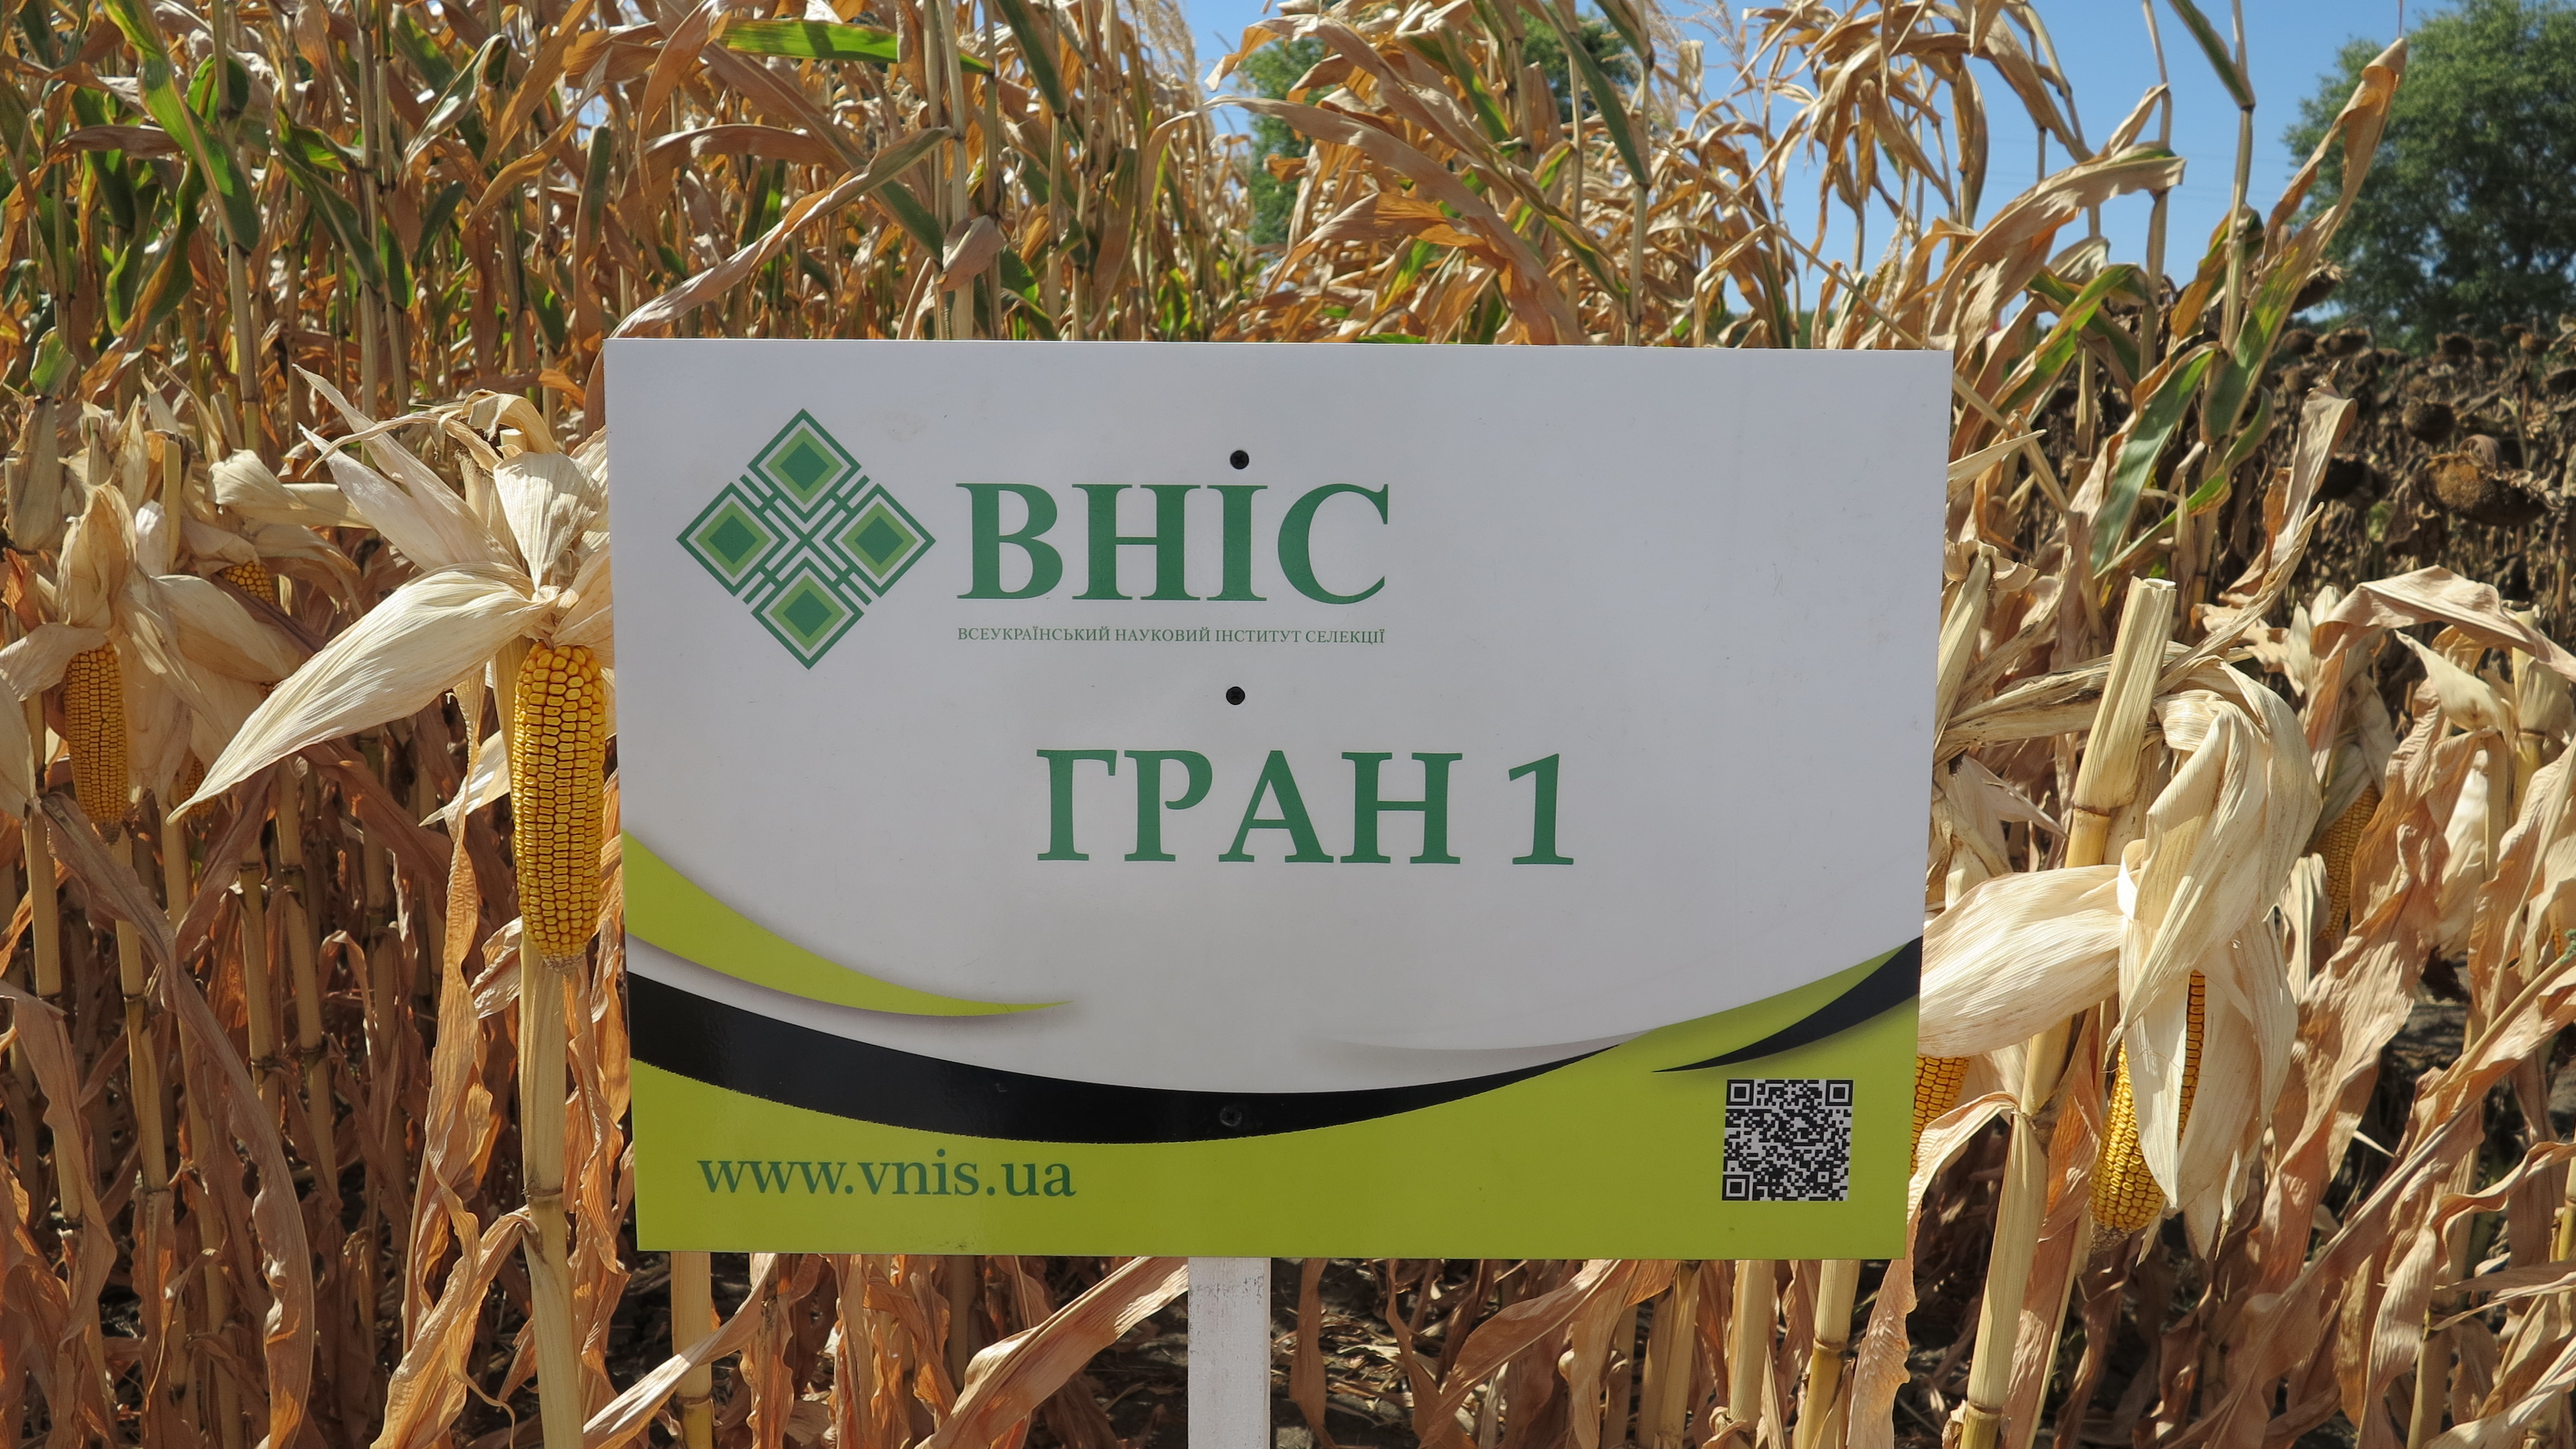 Семена кукурузы Гран 1 (ФАО 370) напрямую от ВНИС  